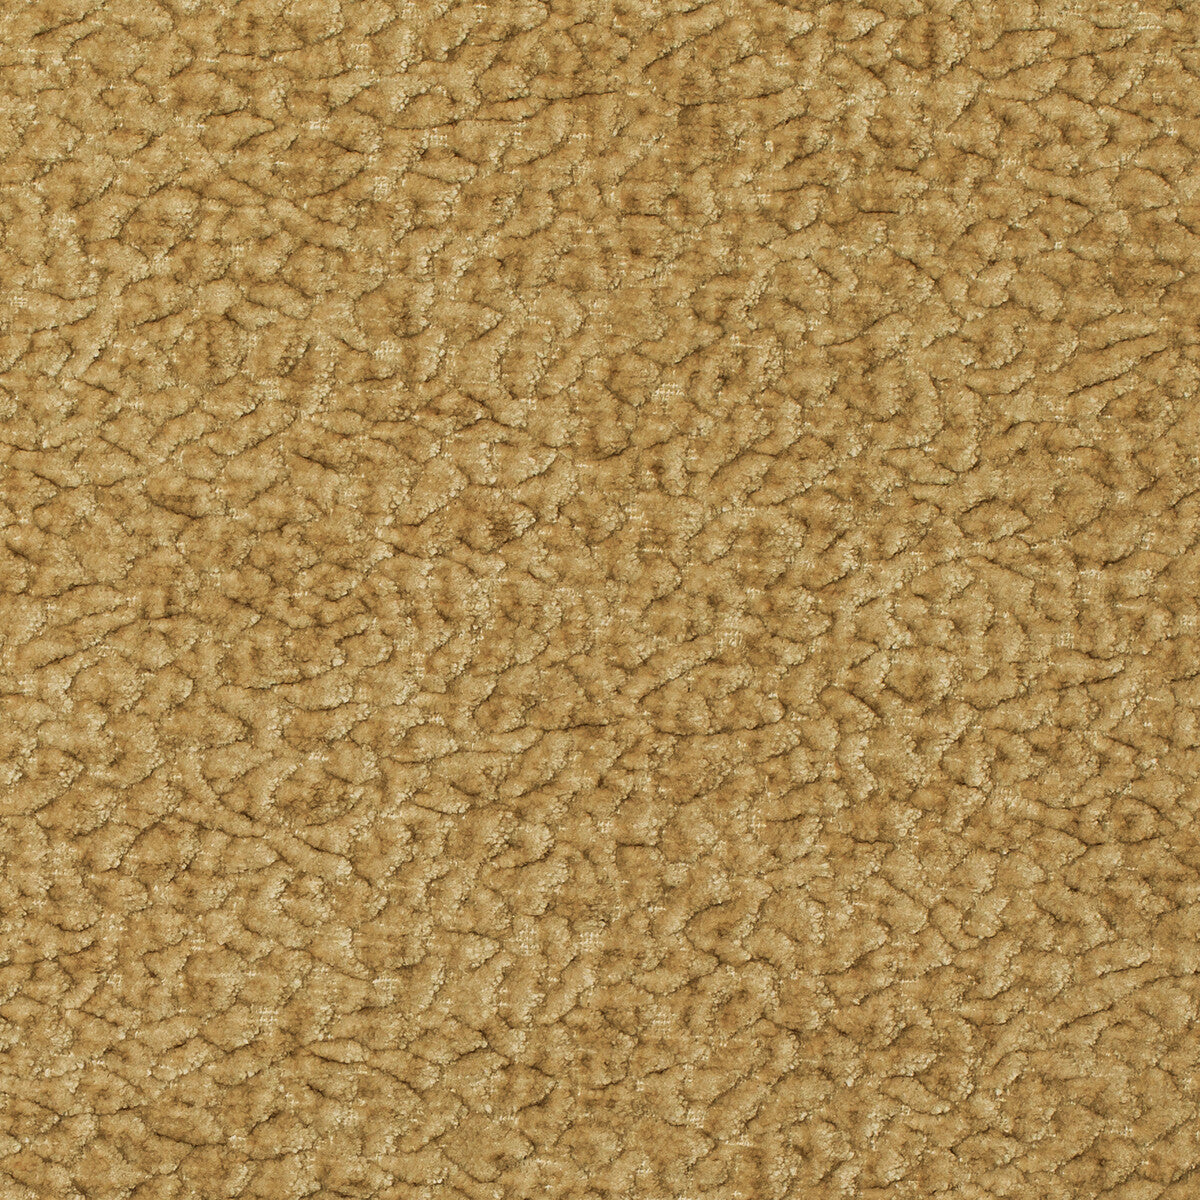 Barton Chenille fabric in honey color - pattern 36074.40.0 - by Kravet Smart